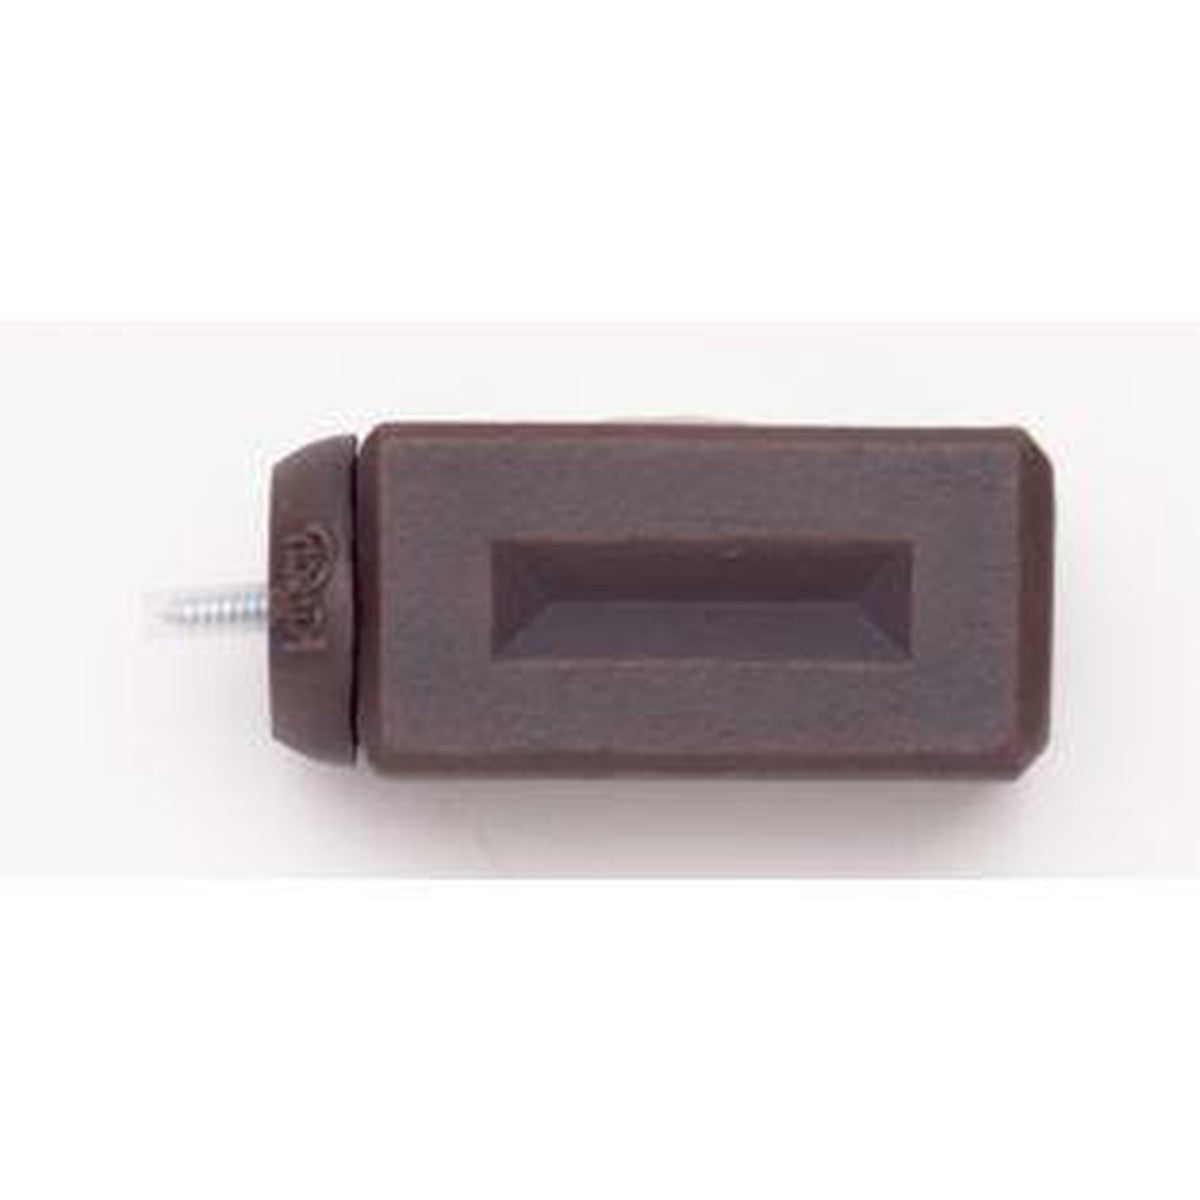 Beveled Brick Finial With Plug - 777 - Rust - Alan Richard Textiles, LTD Kirsch Wrought Iron, Kirsch Wrought Iron Finials